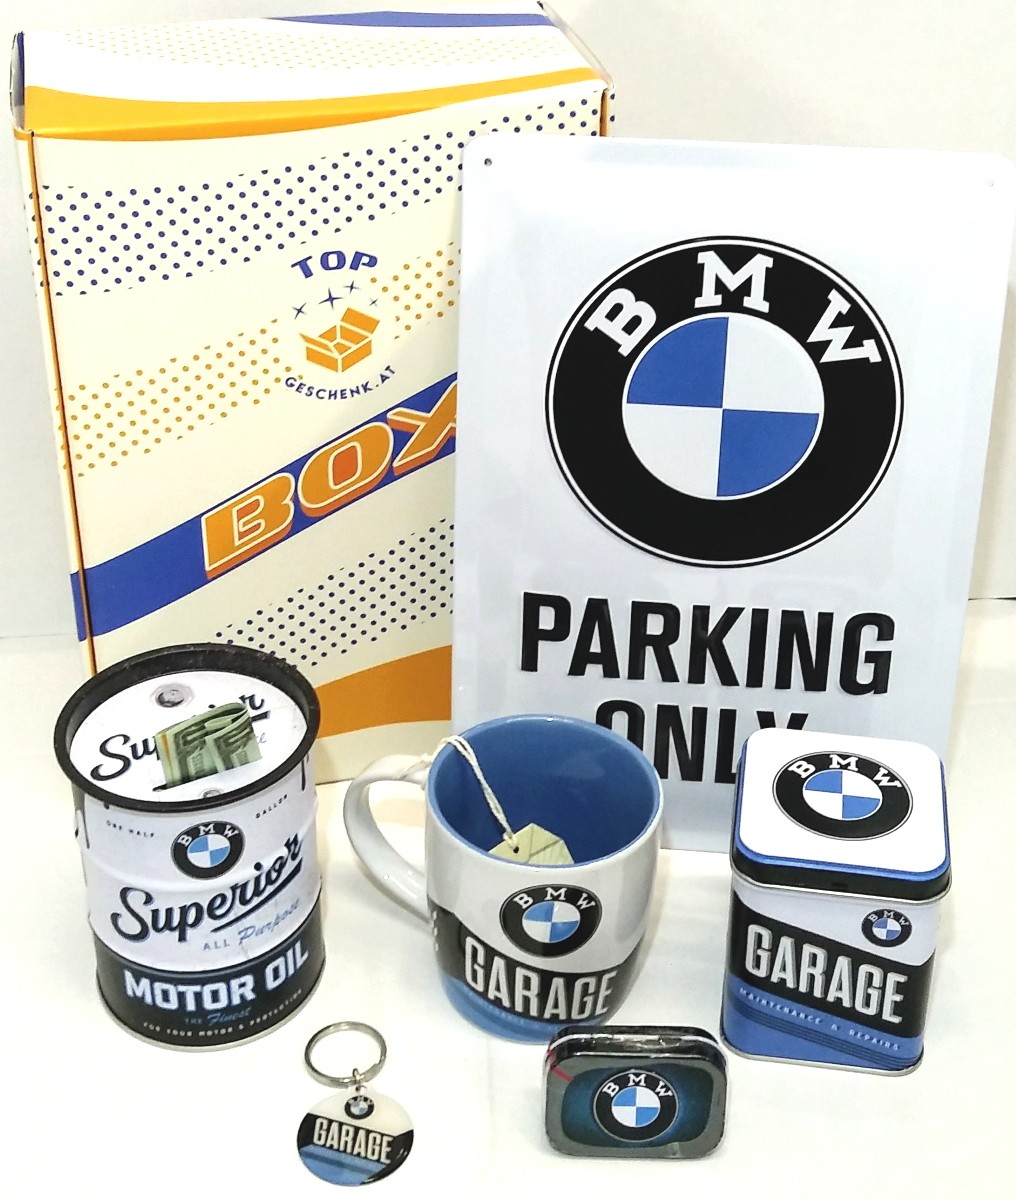 BMW Parking Only - Geschenkbox - Top Geschenk